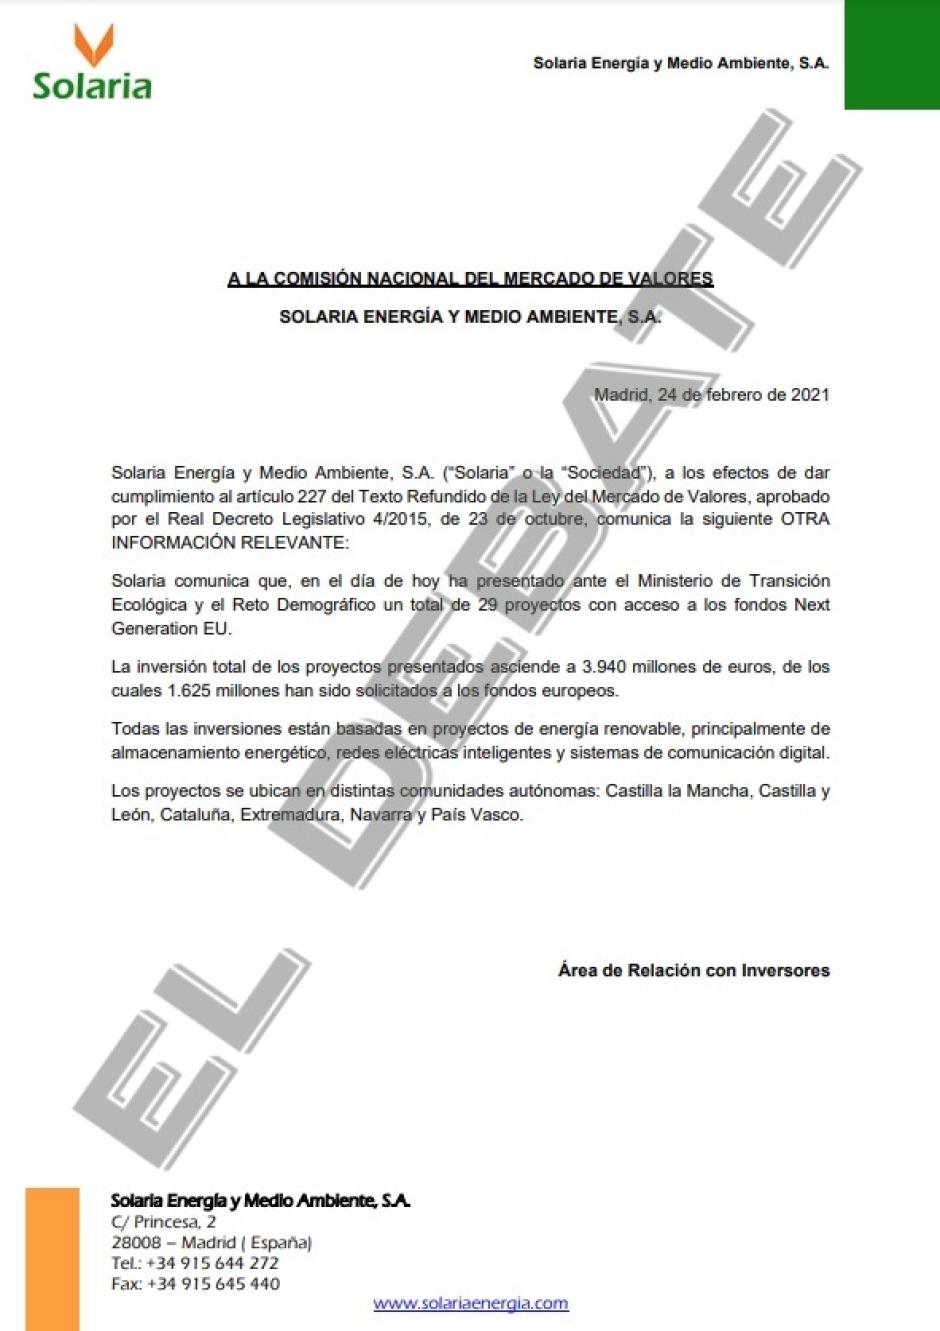 Petición de Solaria de 1.625 millones de euros al Ministerio de Transición Ecológica